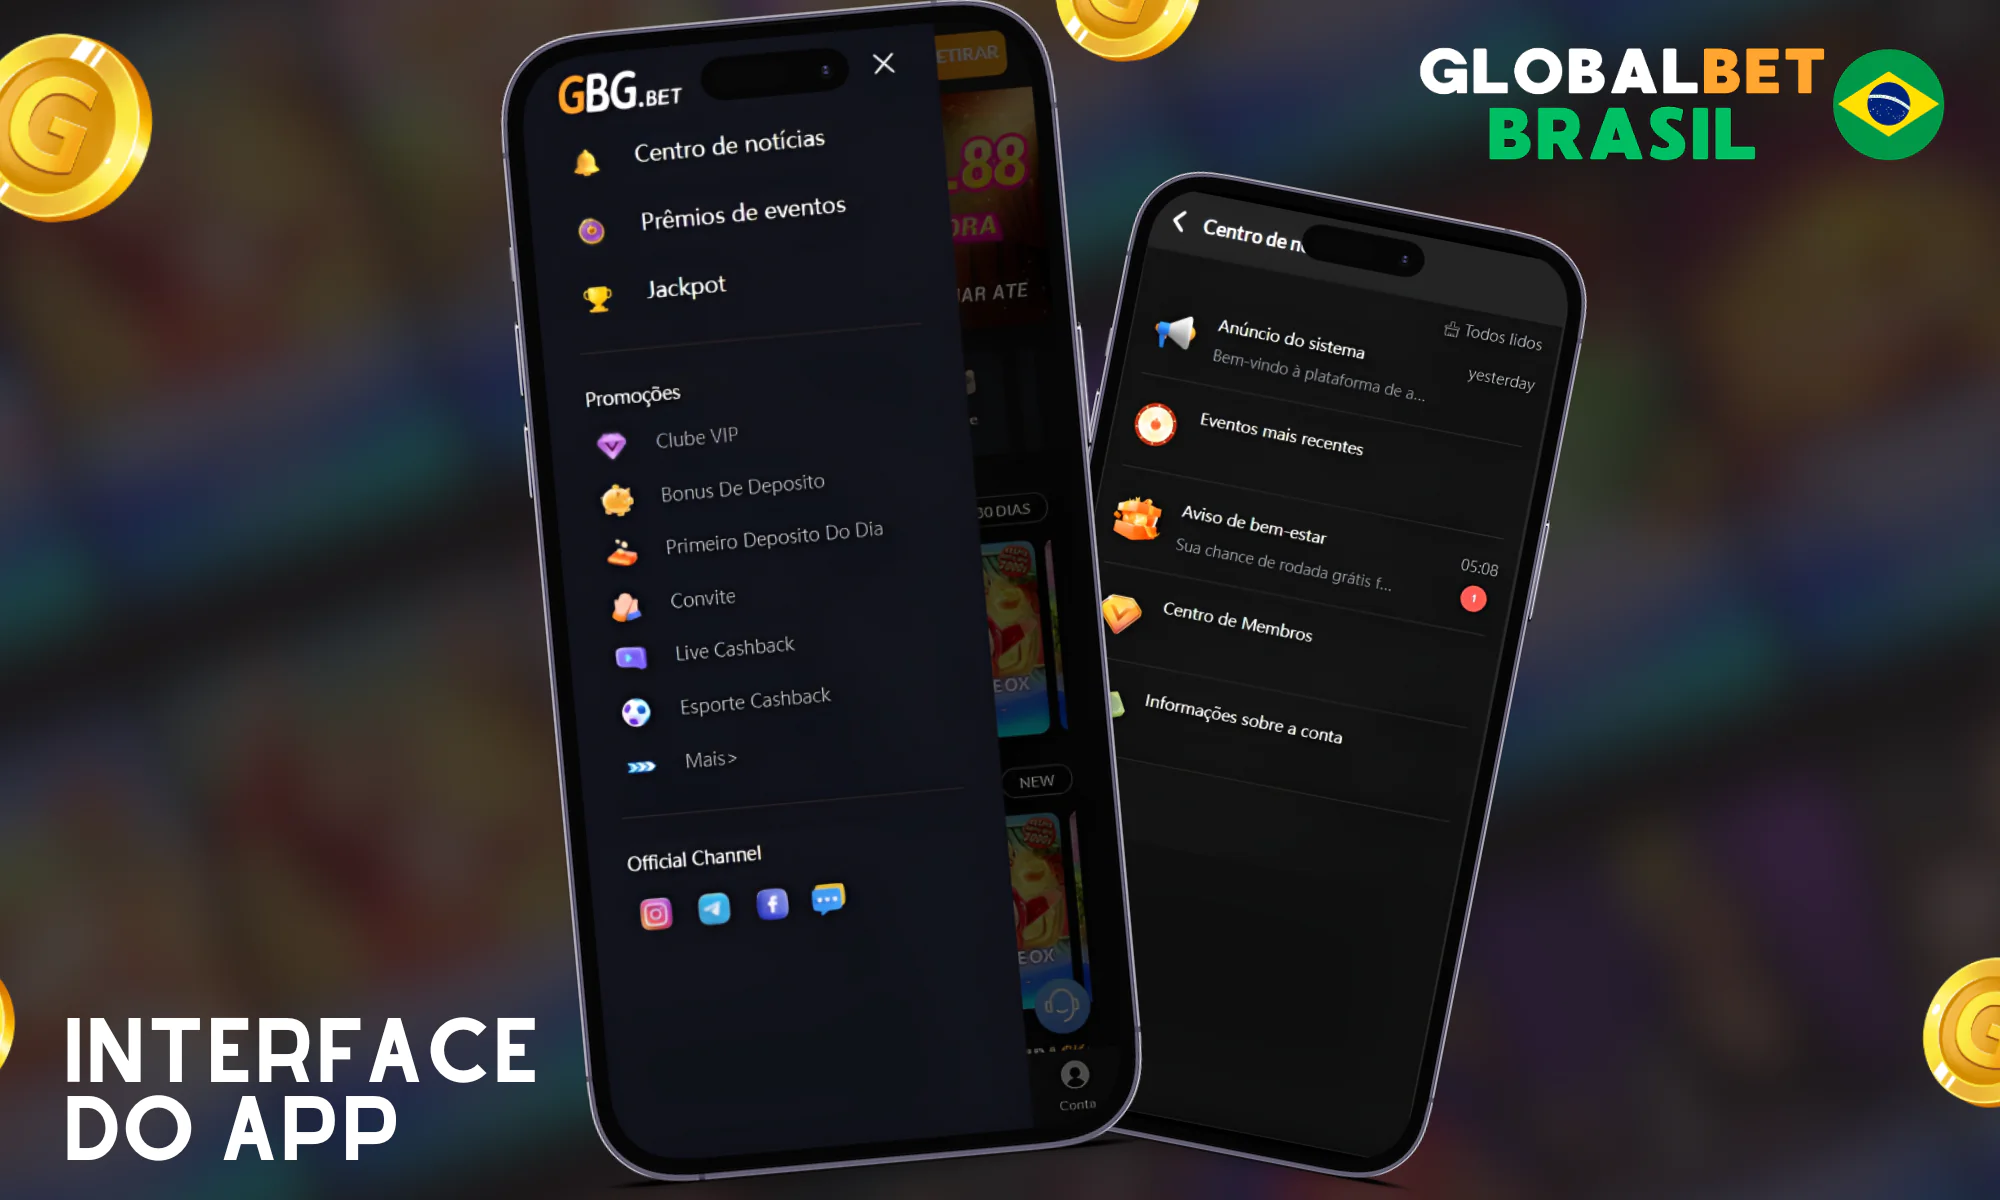 Interface fácil de usar e intuitiva do aplicativo Globalbet